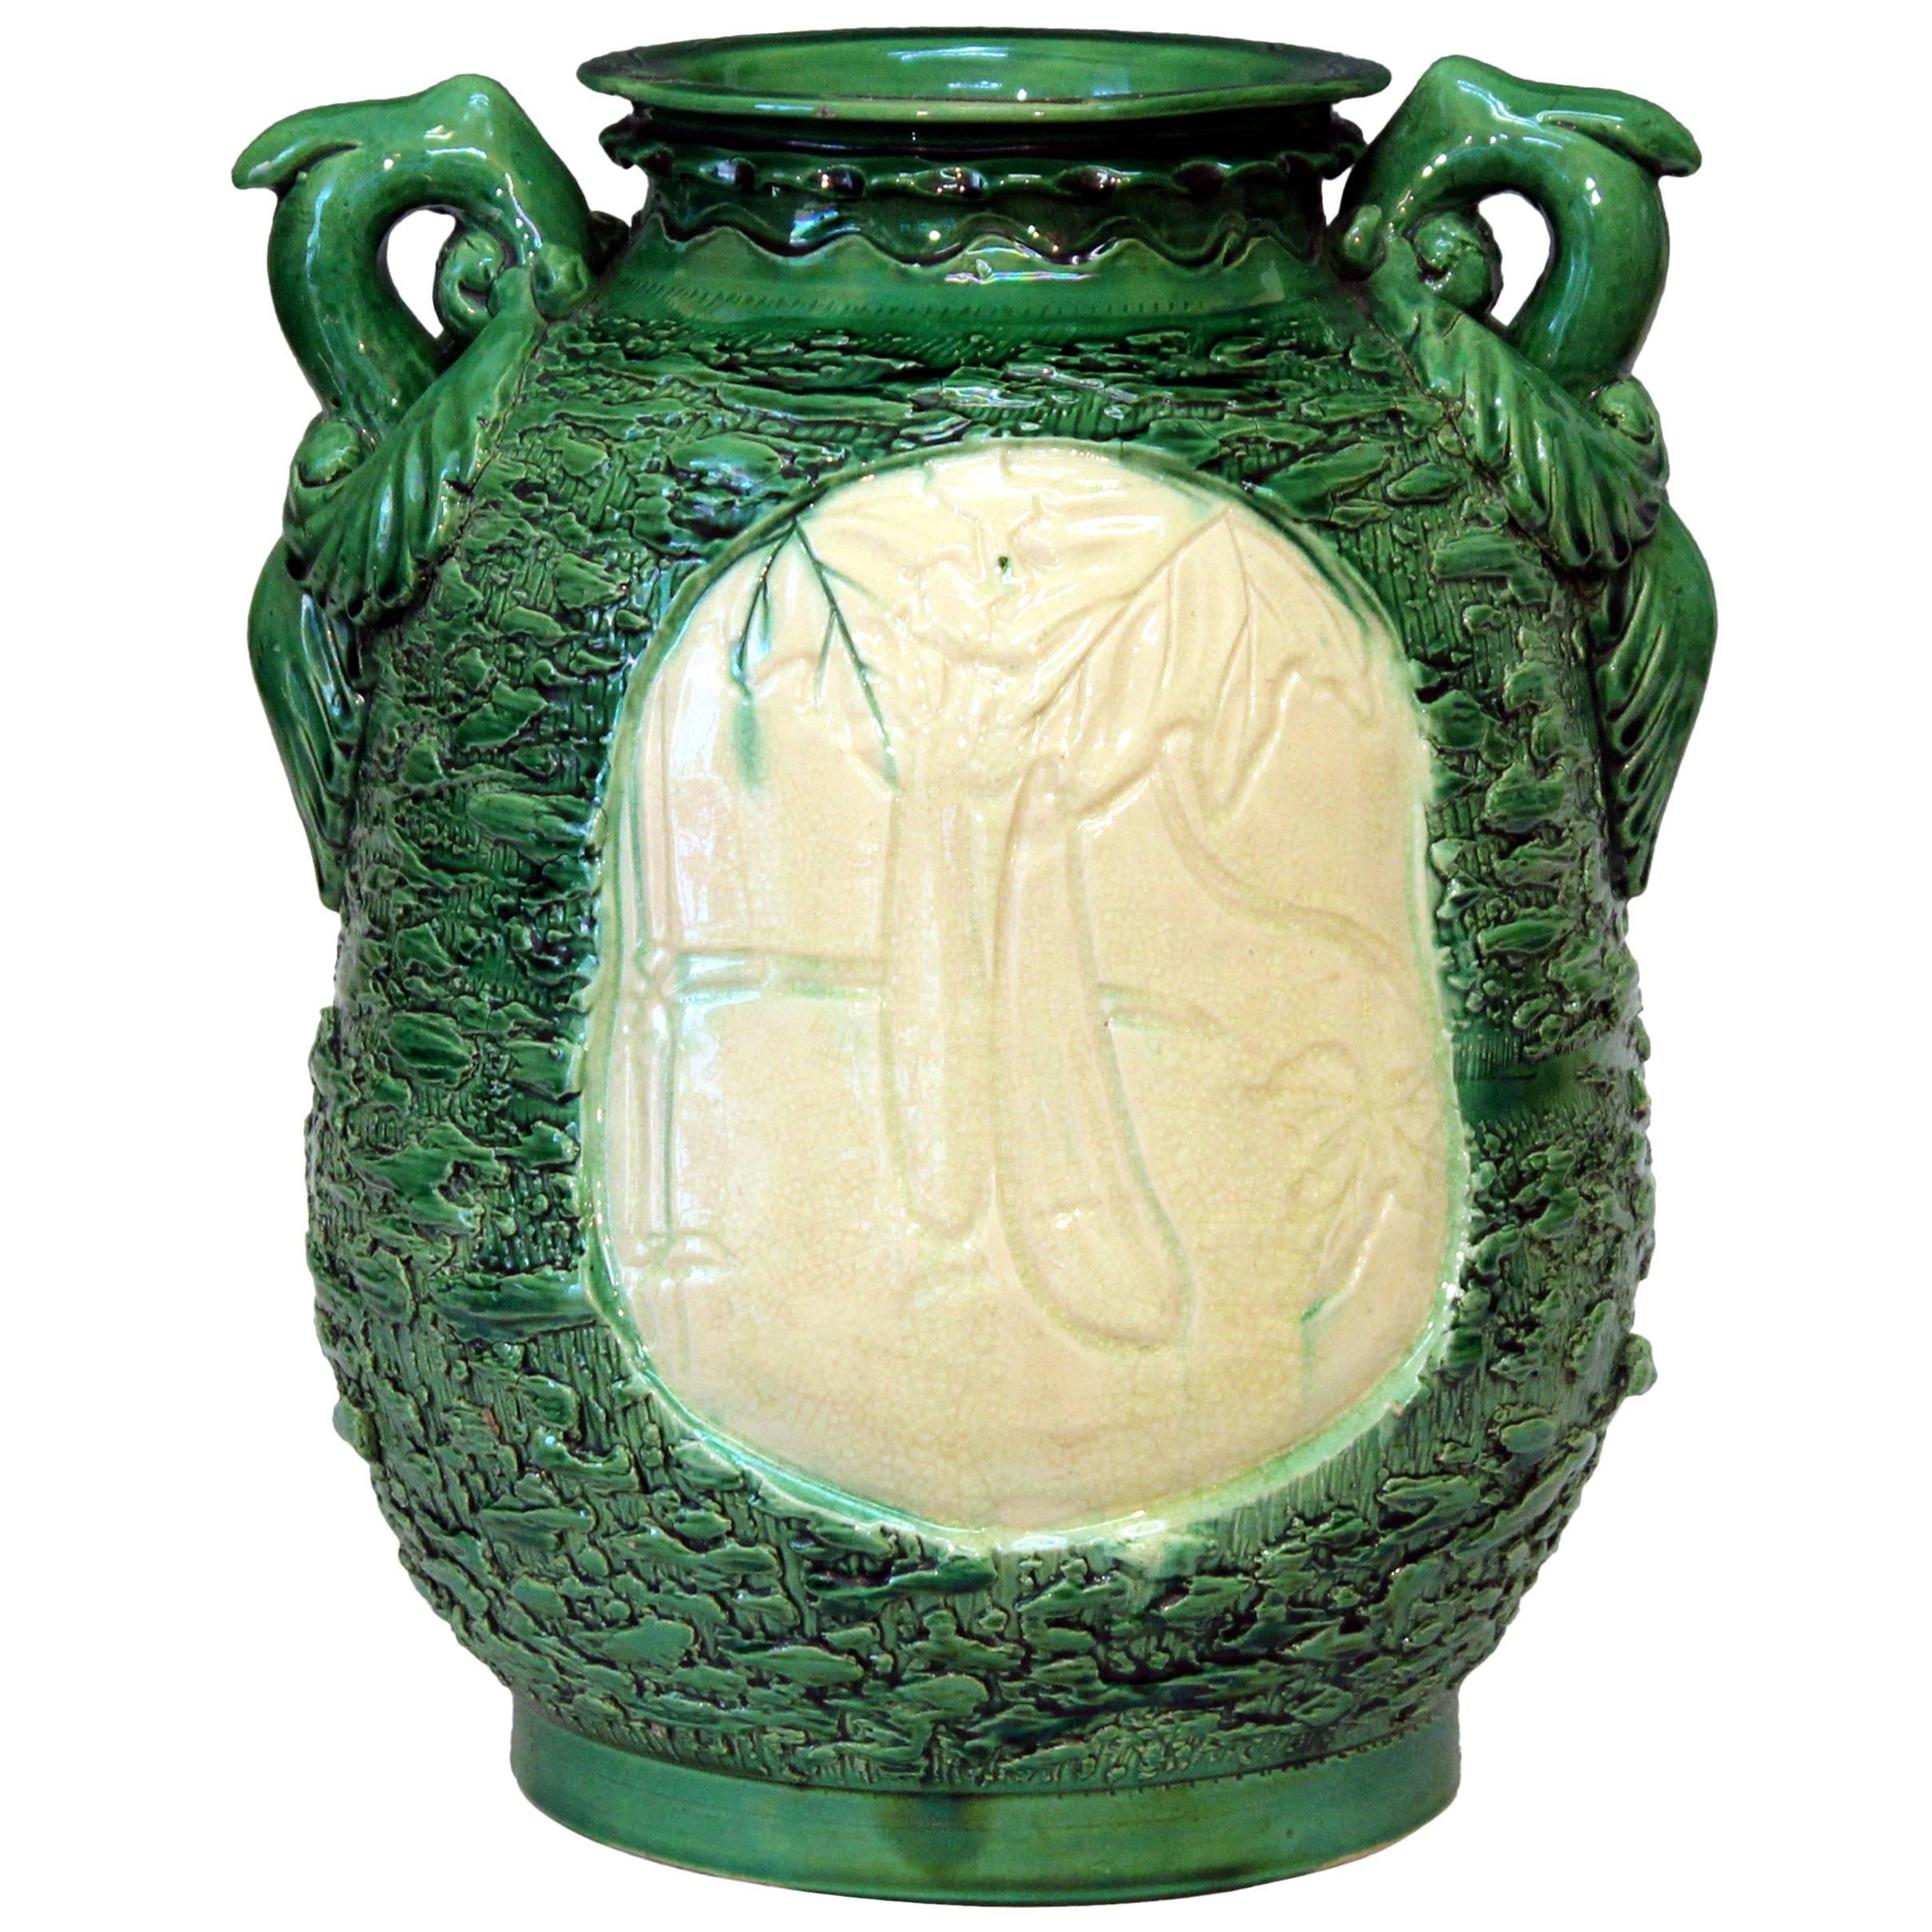 Awaji Pottery - Grand vase inhabituel en forme de grenouille sculpté en vente